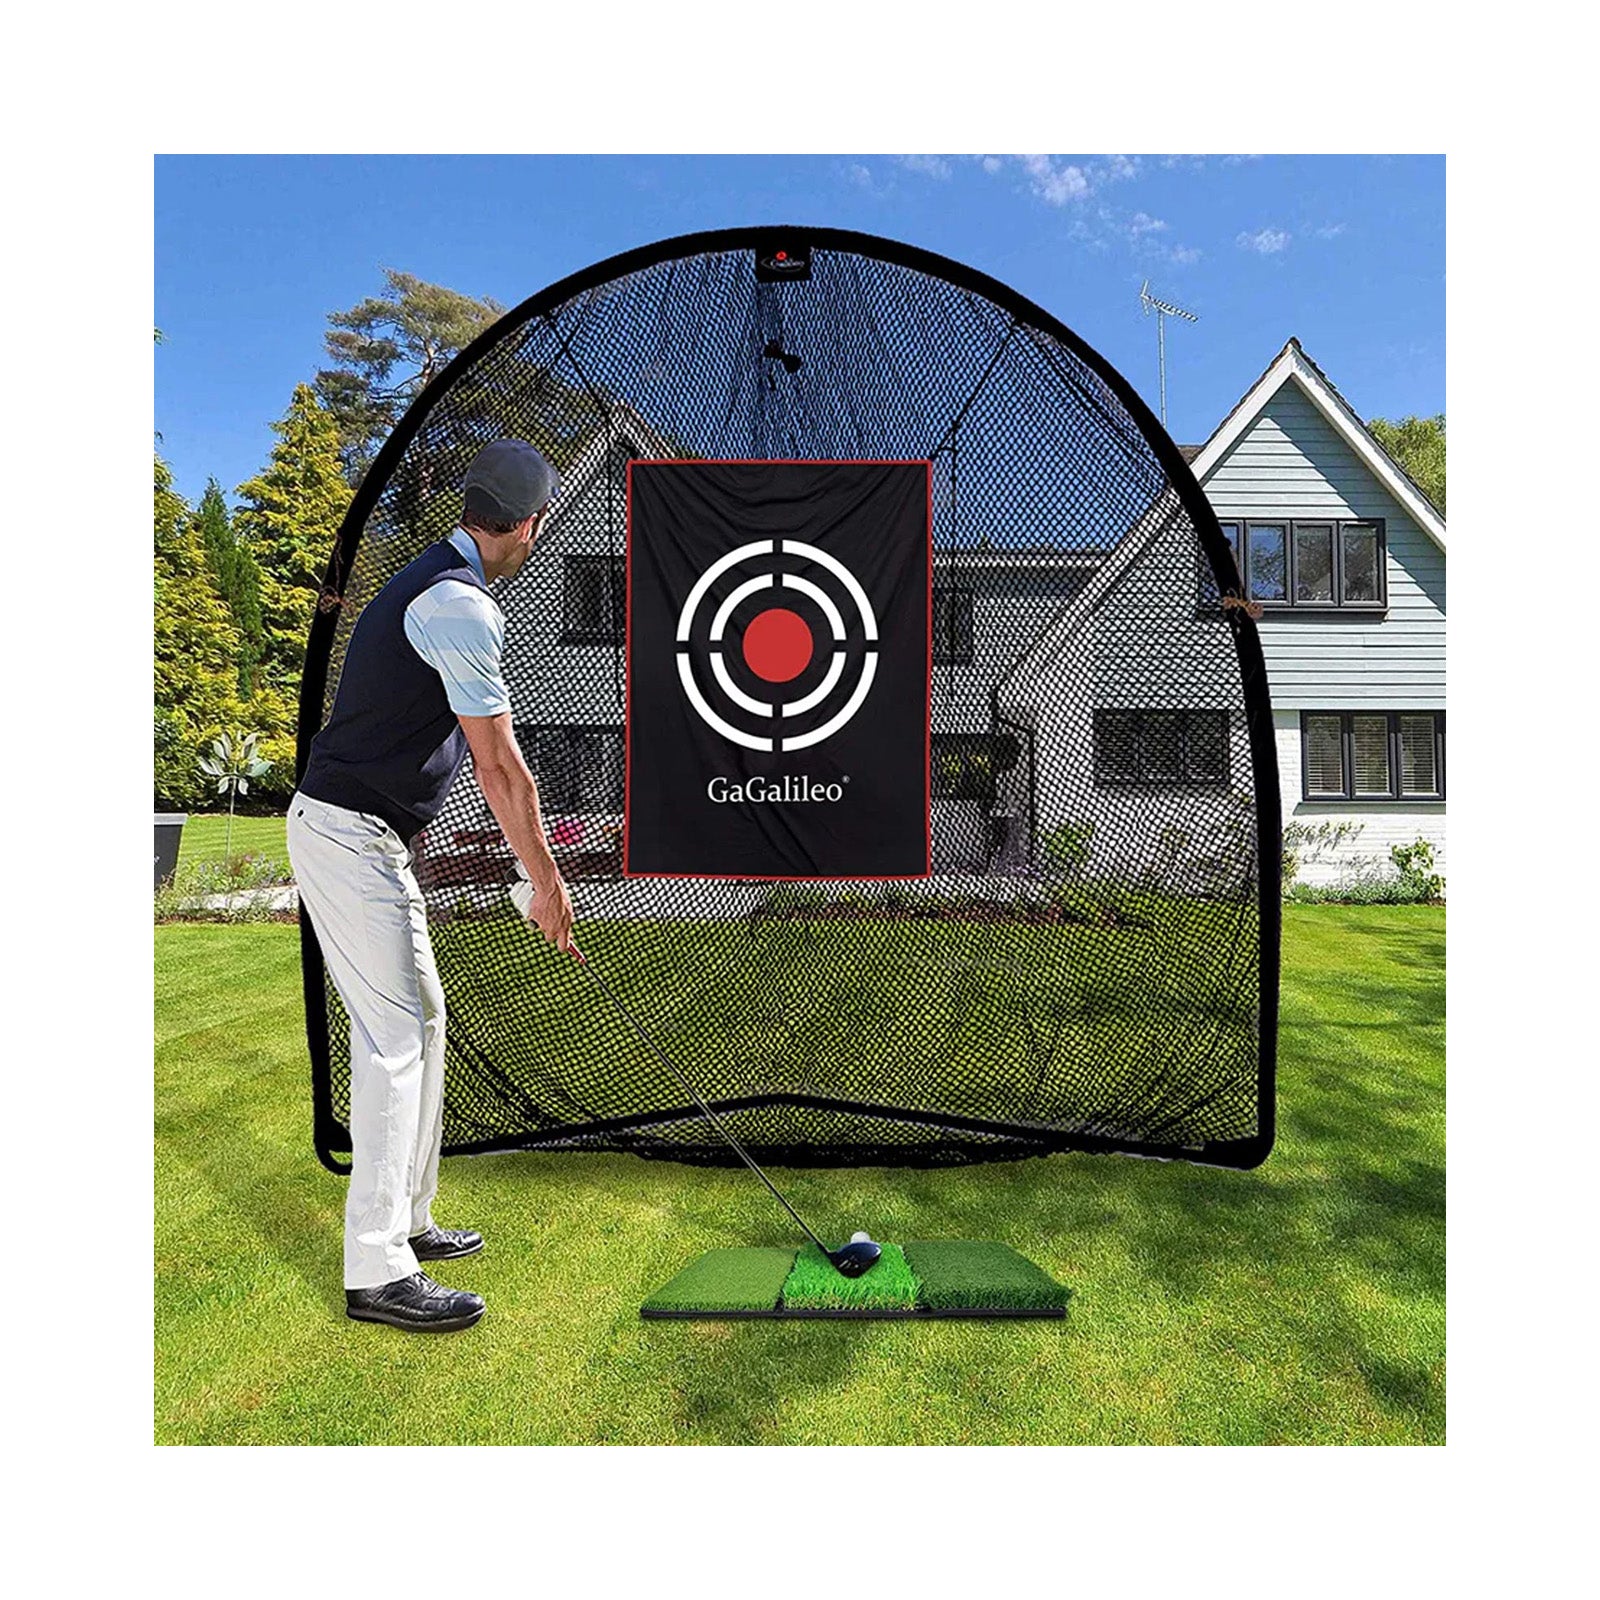 Red de practica de golf para redes de golpe de golf en el patio trasero Red de practica de golf | 8'X 8' X 3.5'| deportes galileo